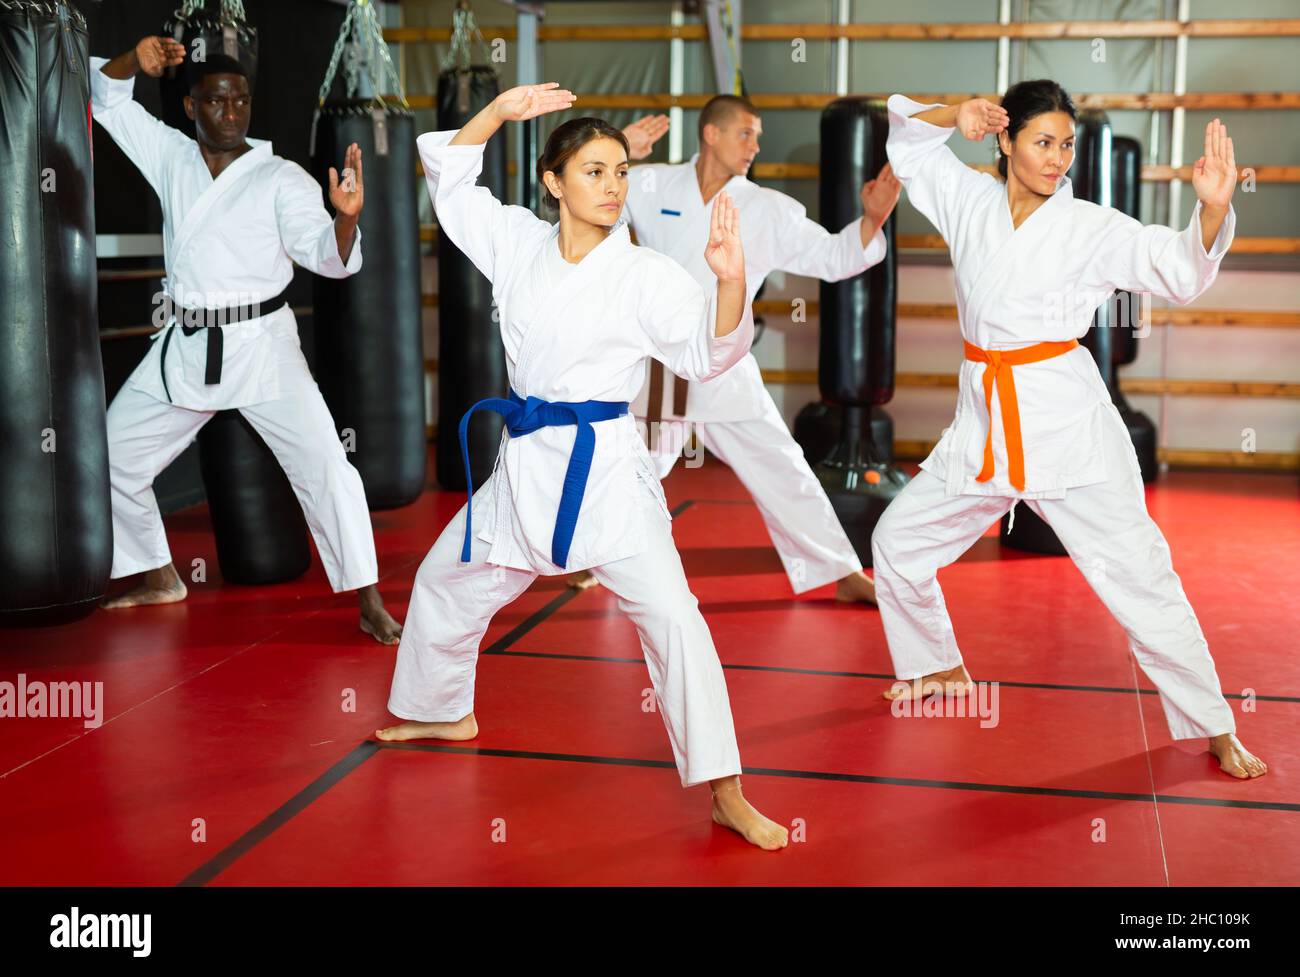 Karate or taekwondo training - athletes in kimono stand in fighting stance  Stock Photo - Alamy